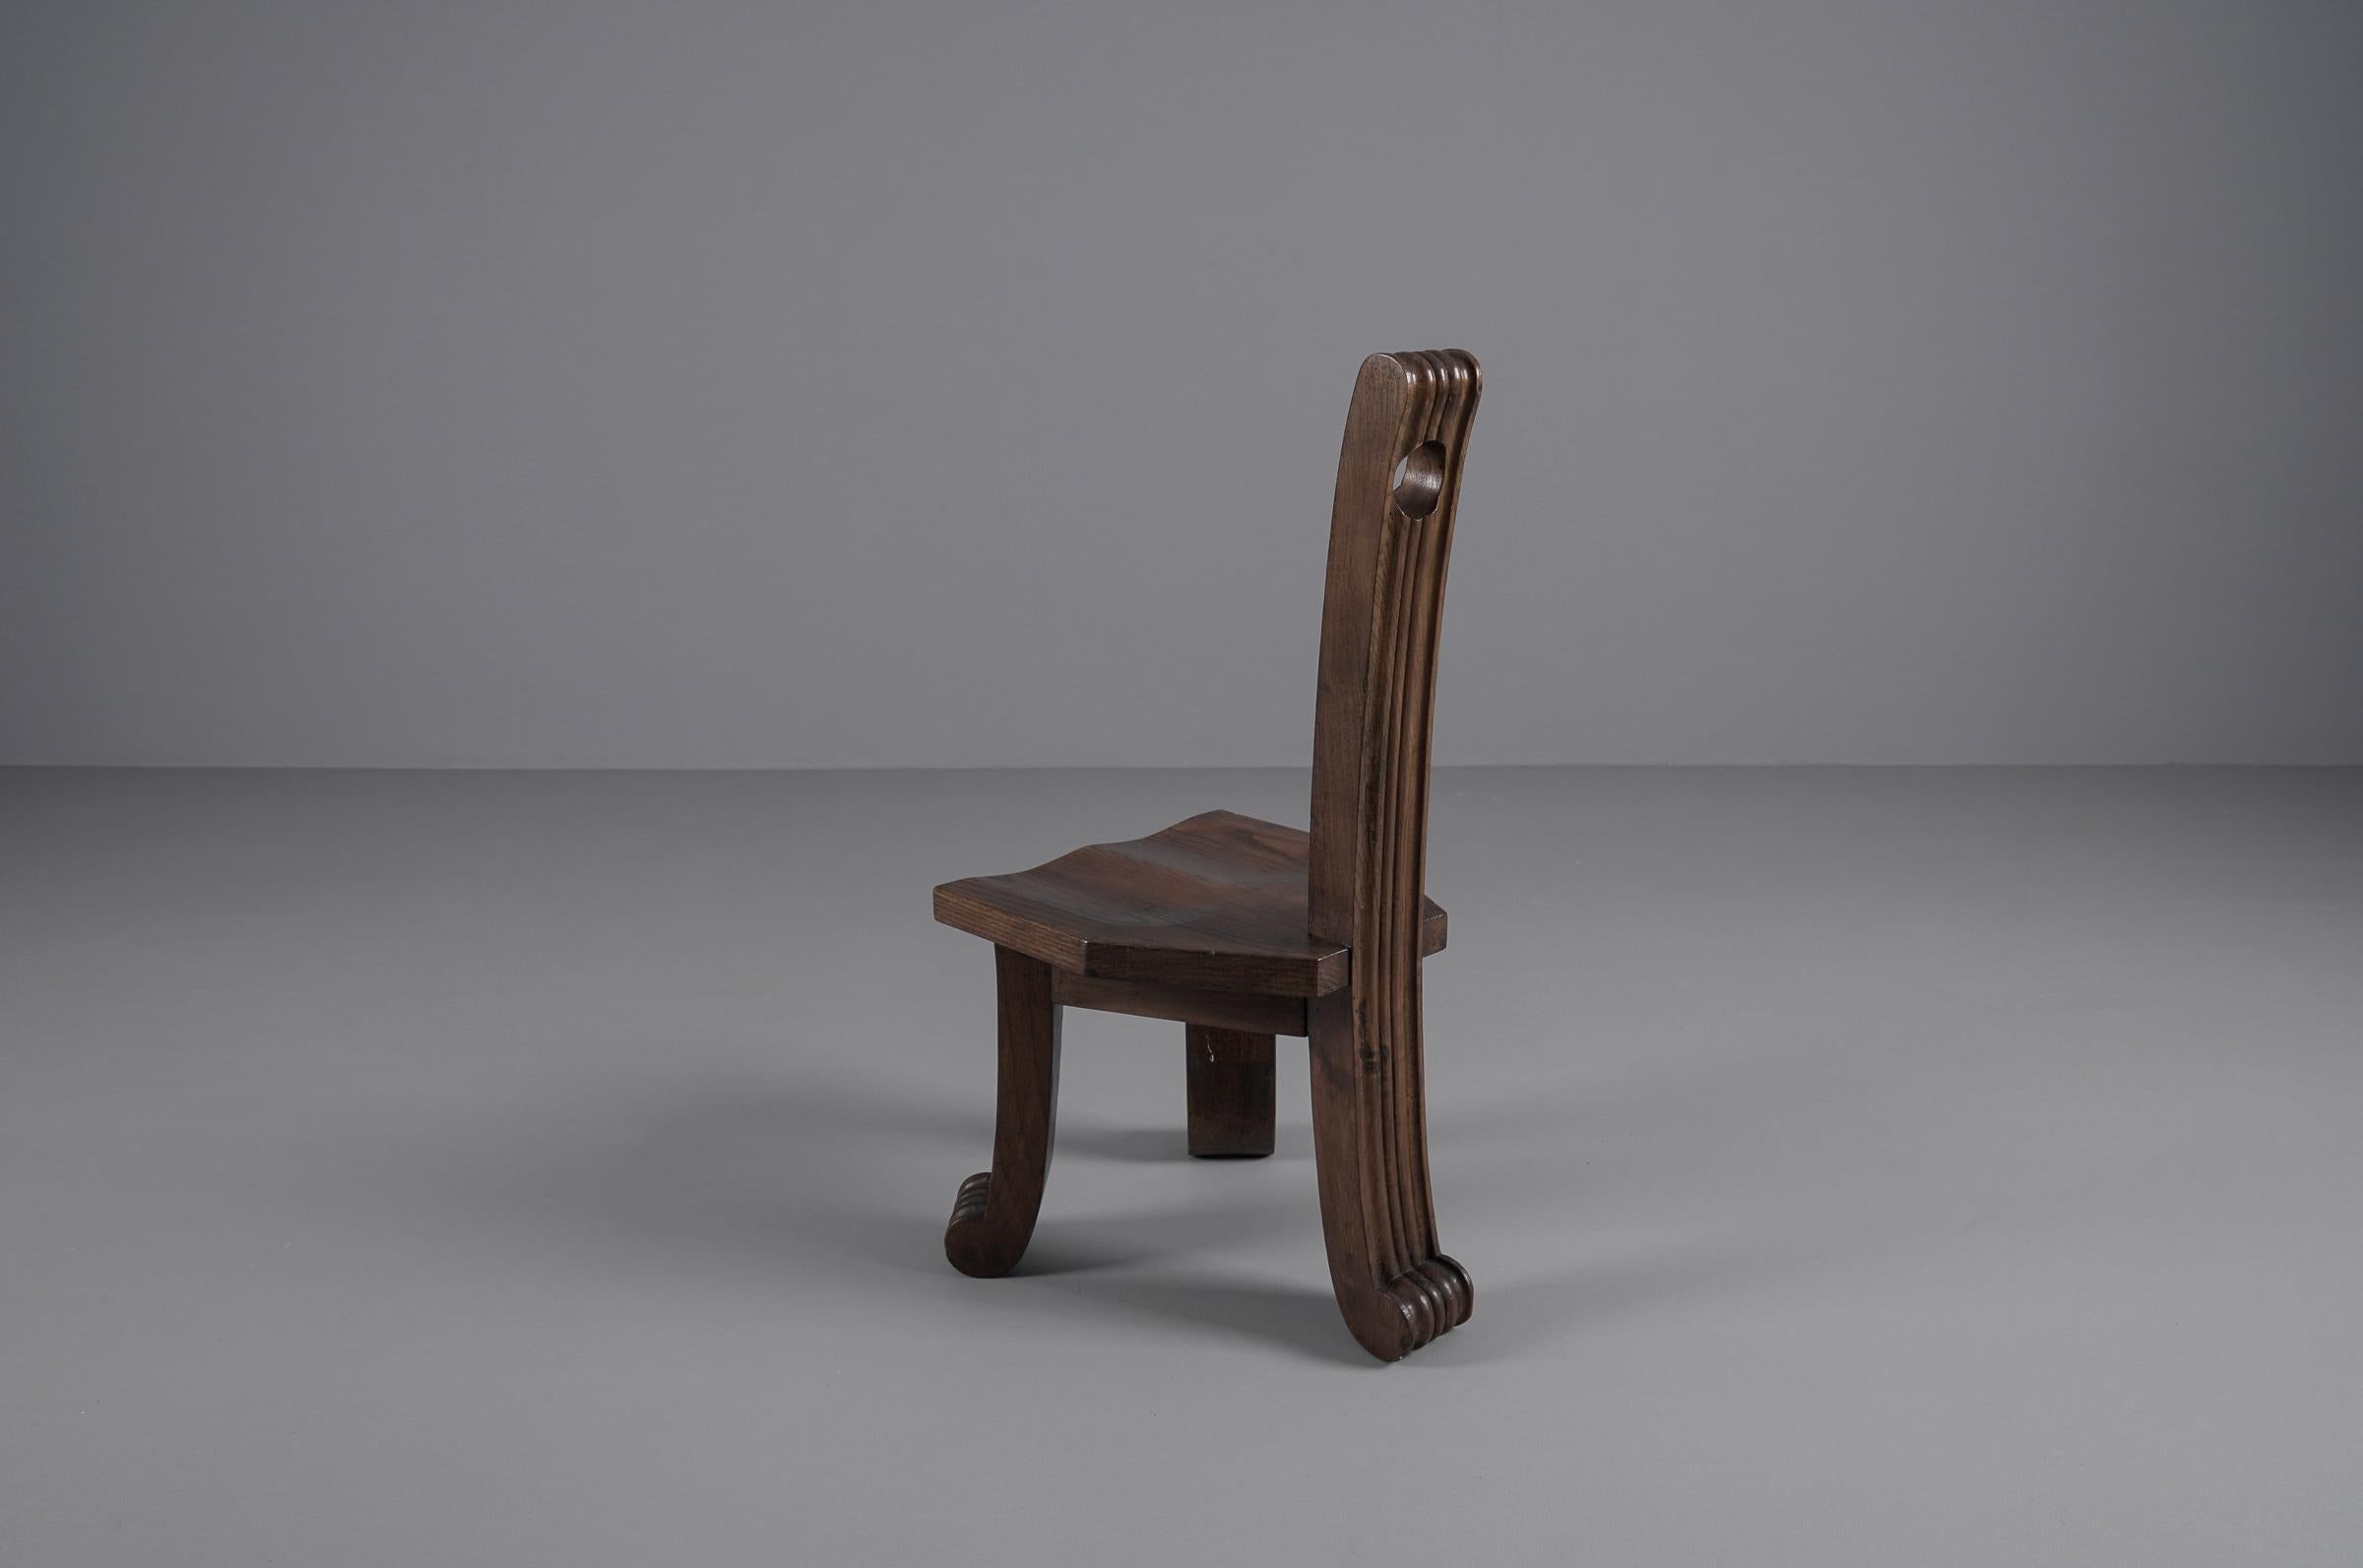 Primitive Rustic Britalist Modern Sculptured Chair, 1940s Europe 5